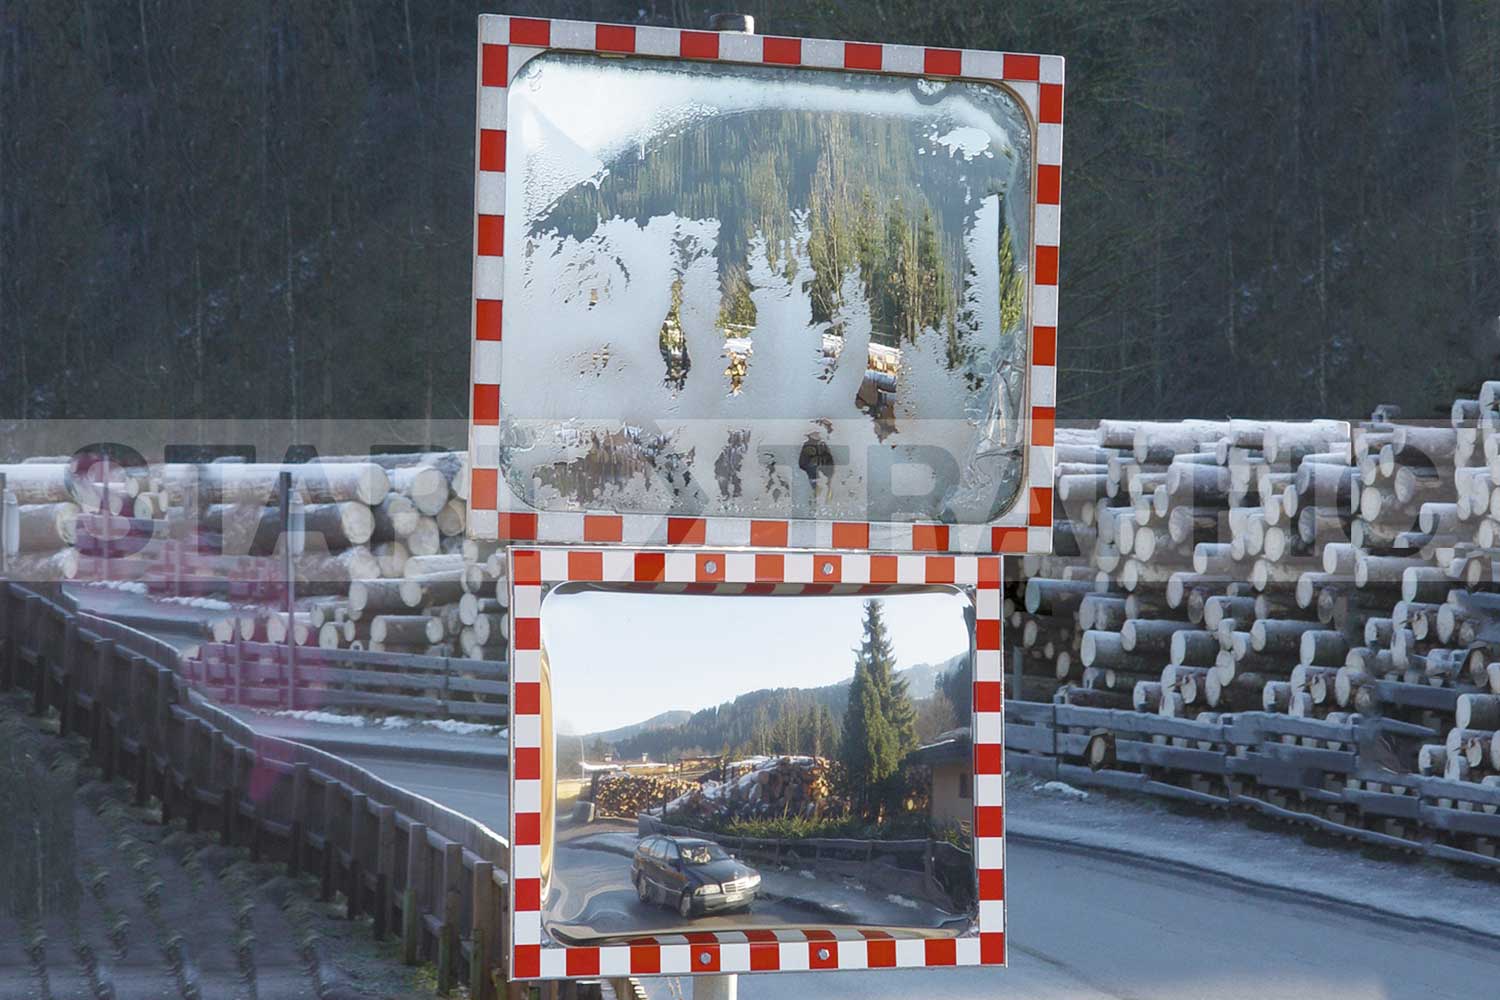 Ice Free Mirror installed on Mountain Road